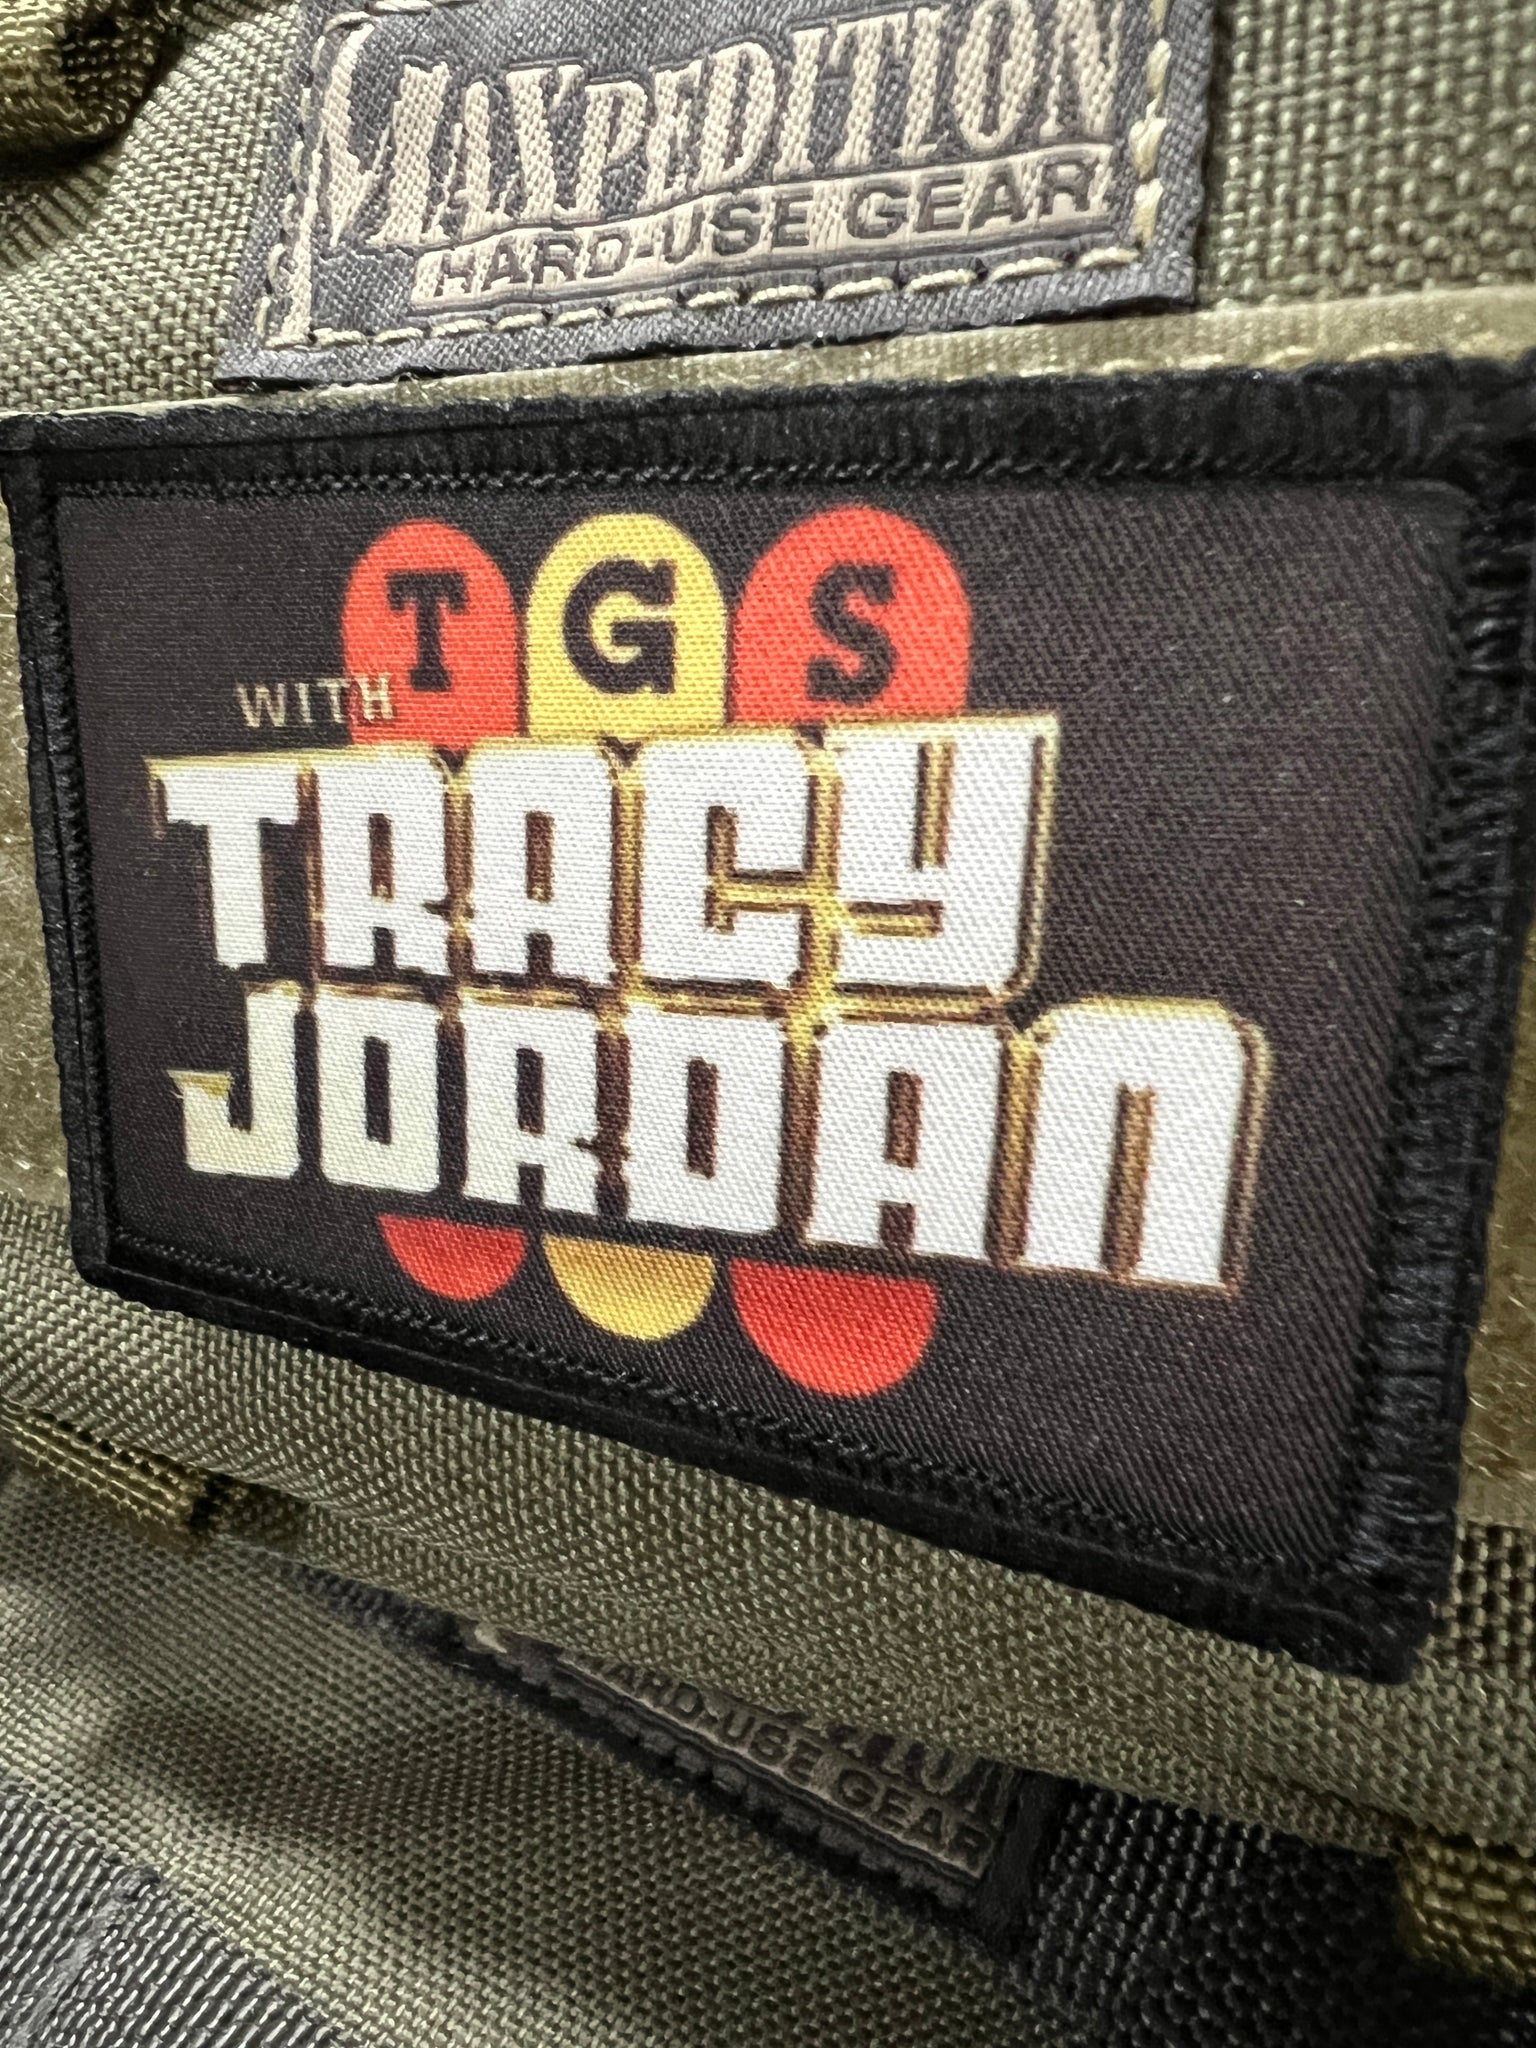 TGS Tracy Morgan3